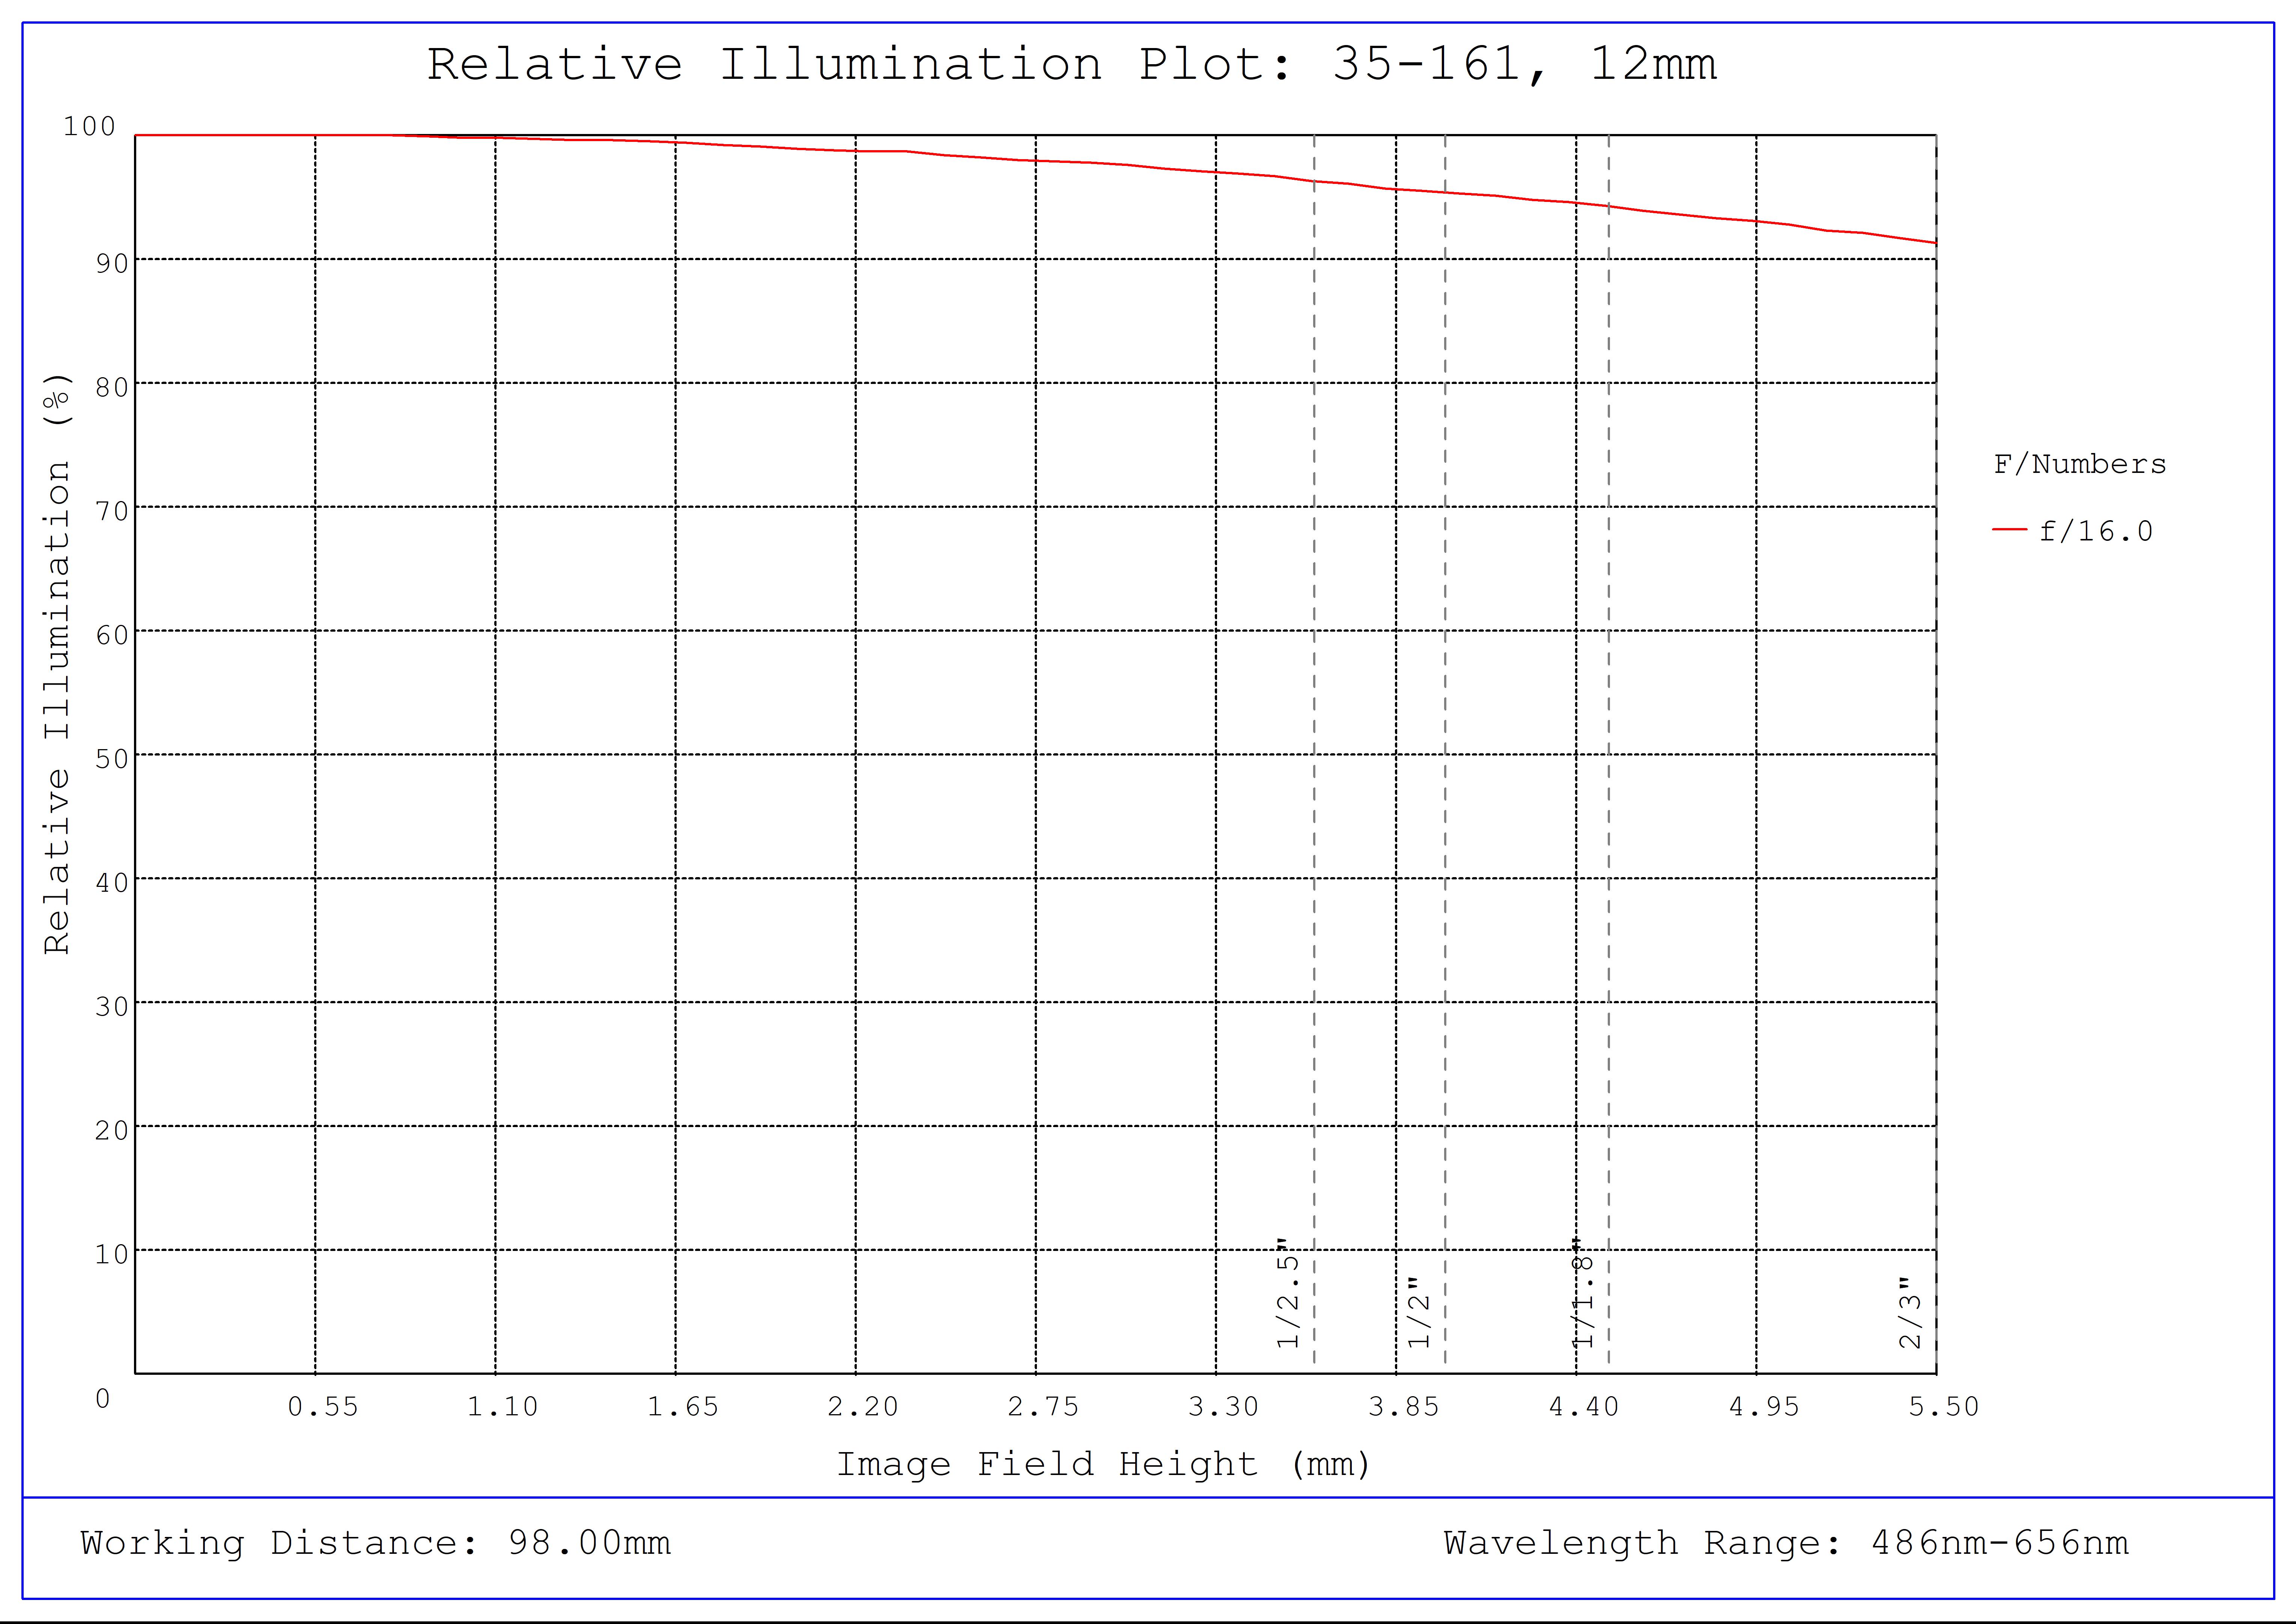 #35-161, 12mm, f/16 Cr Series Fixed Focal Length Lens, Relative Illumination Plot